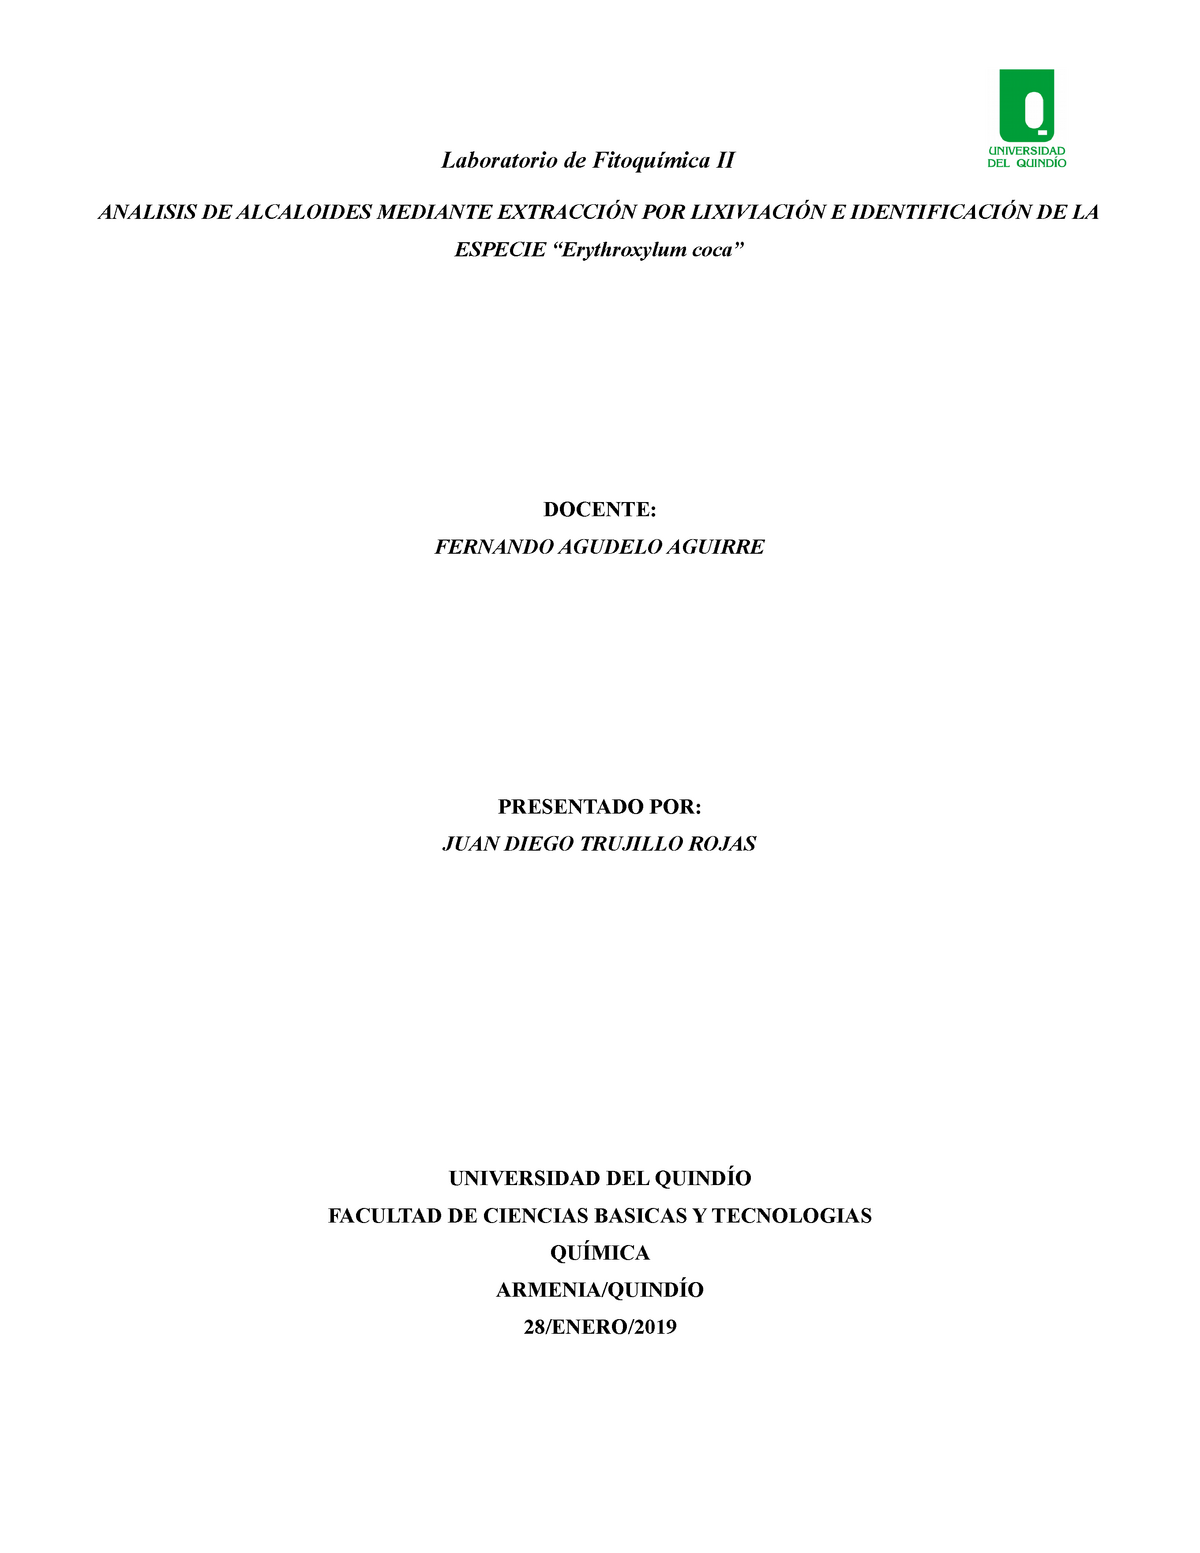 kamus ilmiah pdf